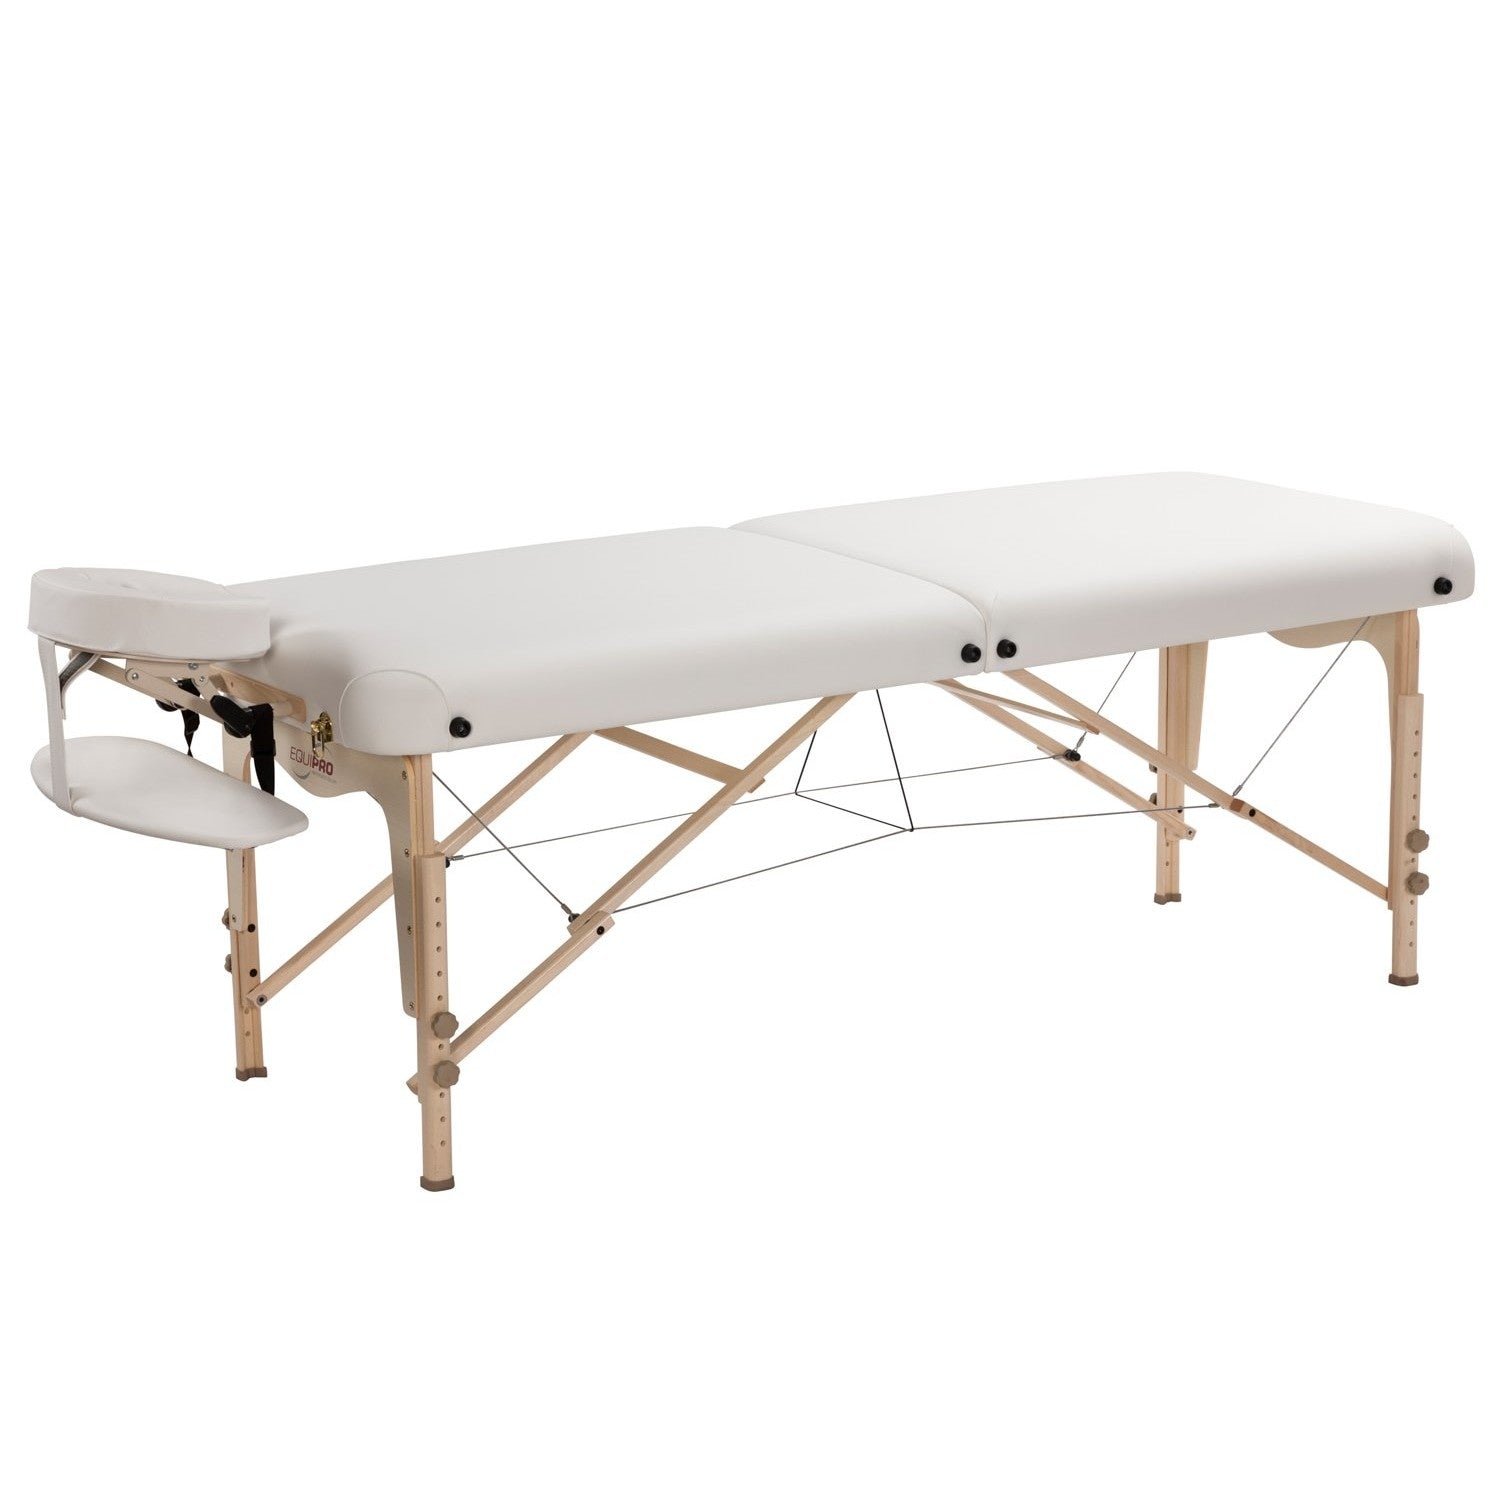 Equipro Equipro Shiatsu - Portable Massage Table Portable Massage Tables - ChairsThatGive